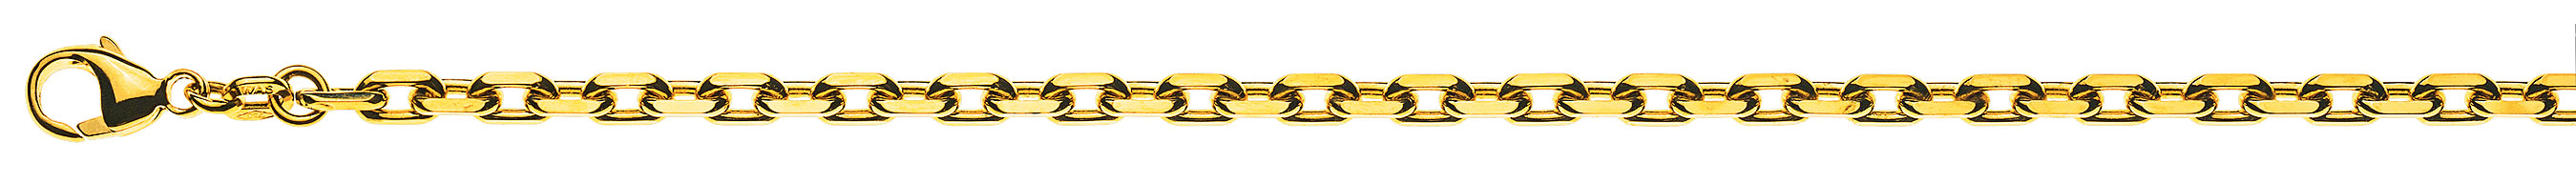 AURONOS Prestige Necklace yellow gold 18K anchor 4-ply 45cm 3.5mm